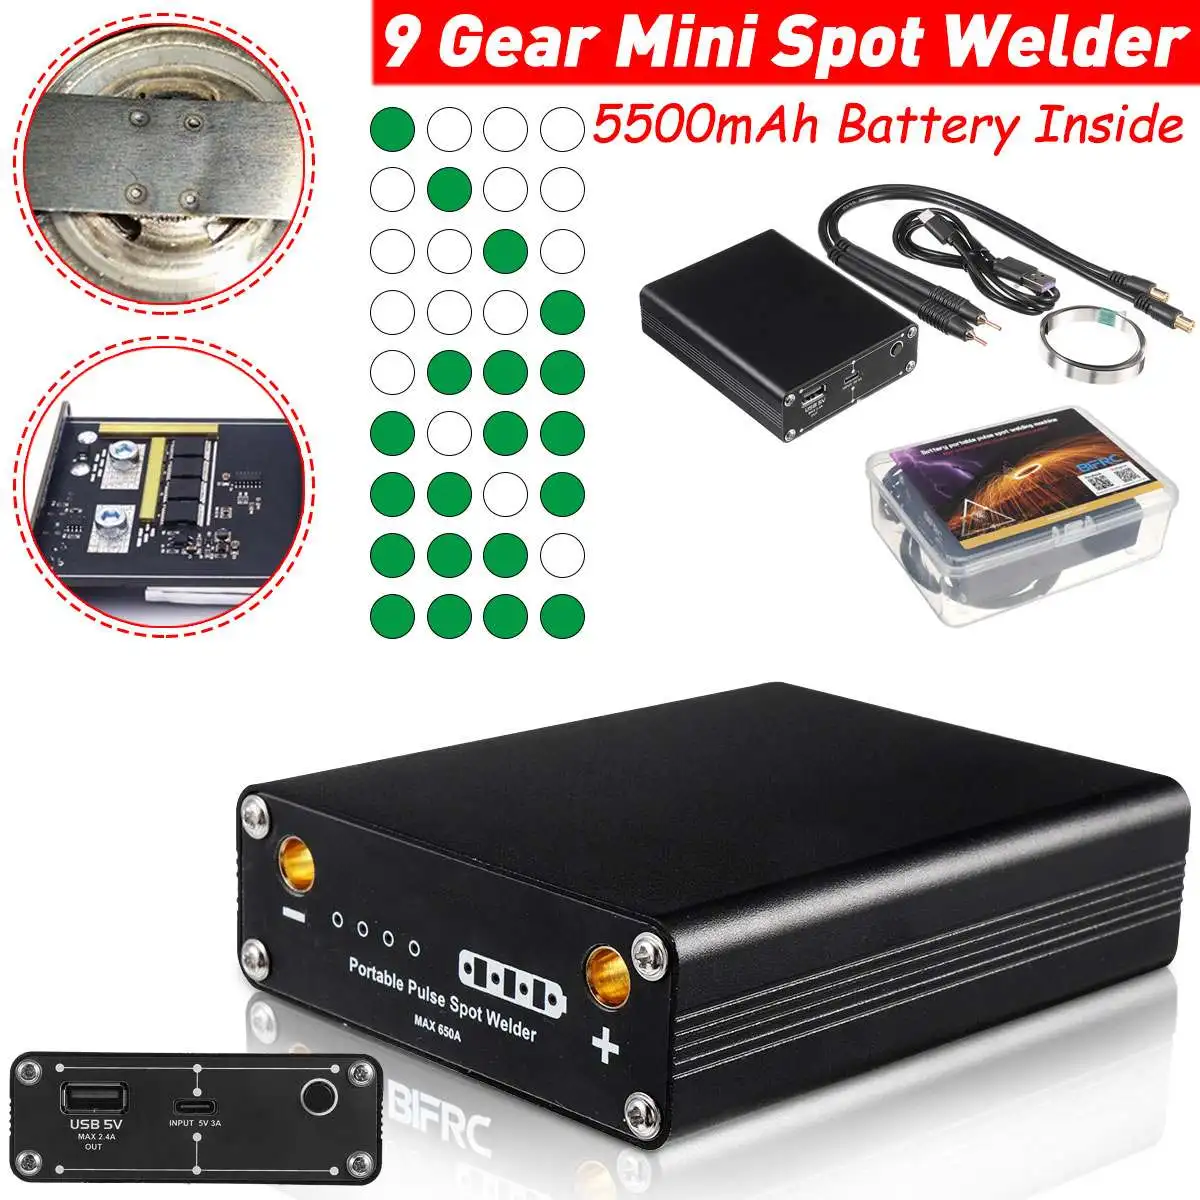 

5500mAh Spot Welder Portable 9 Gears Adjustable Mini Spot Welding Machine Spot Welder Spot Welding Machine Tool Kit